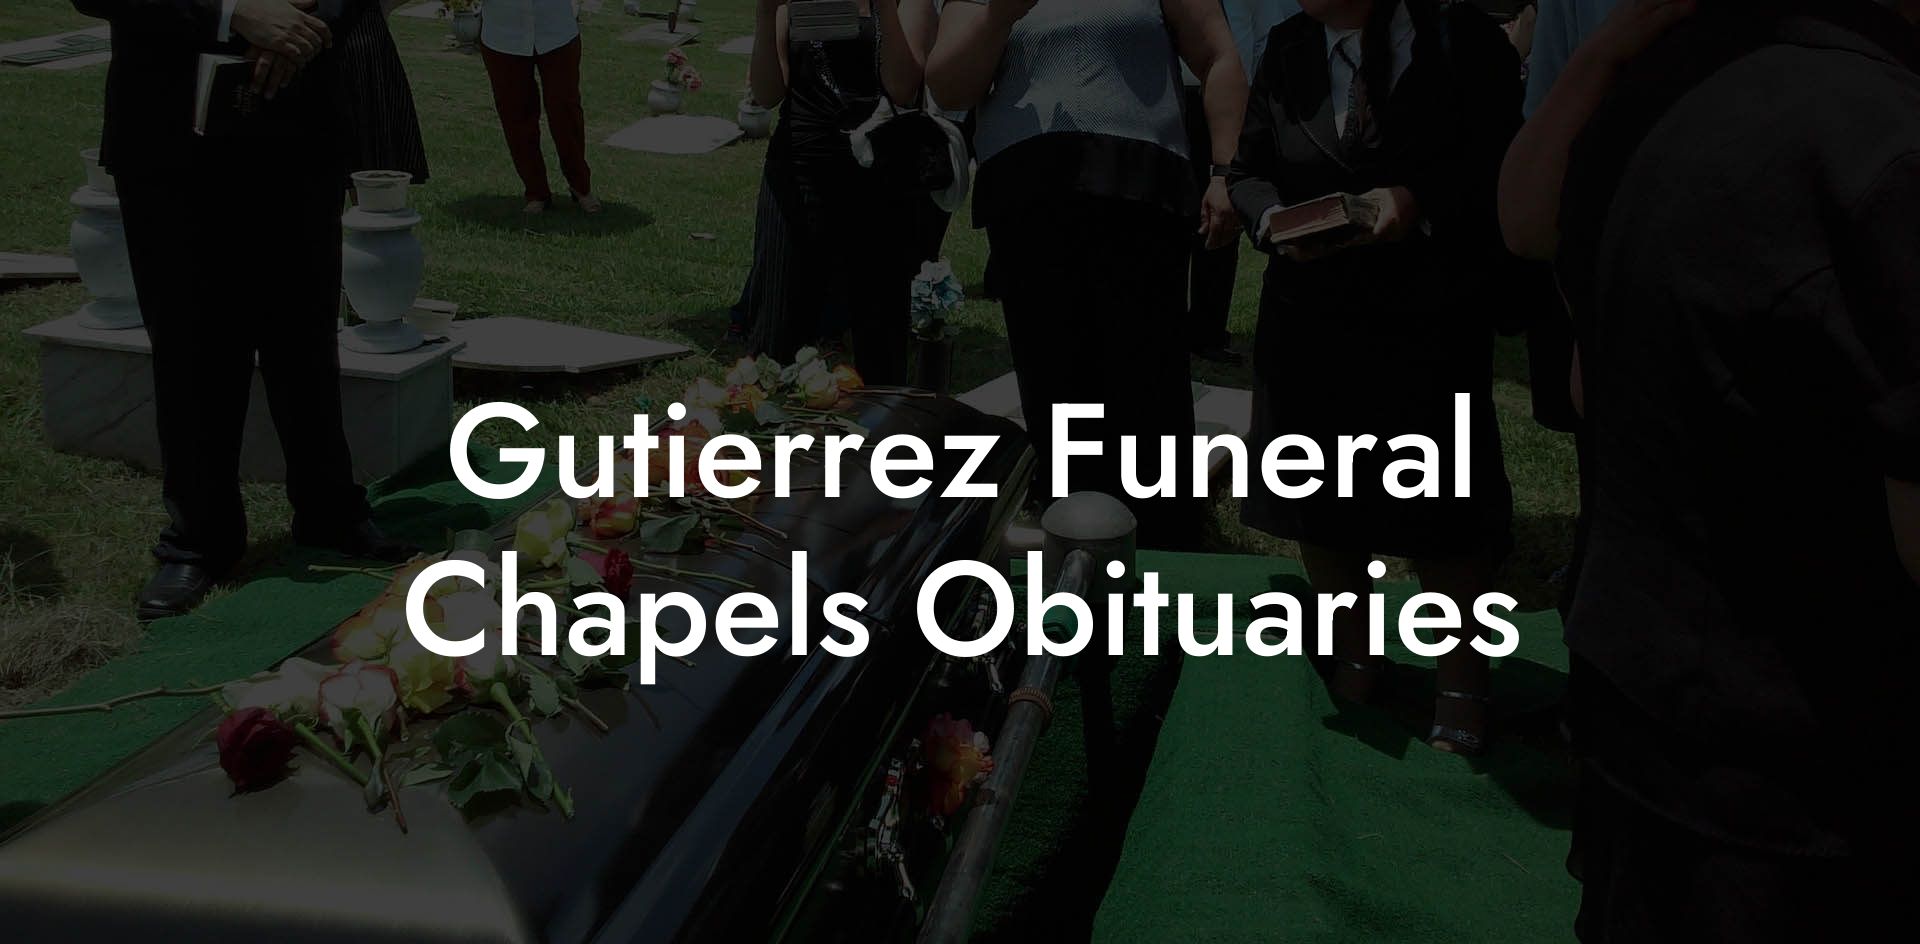 Gutierrez Funeral Chapels Obituaries